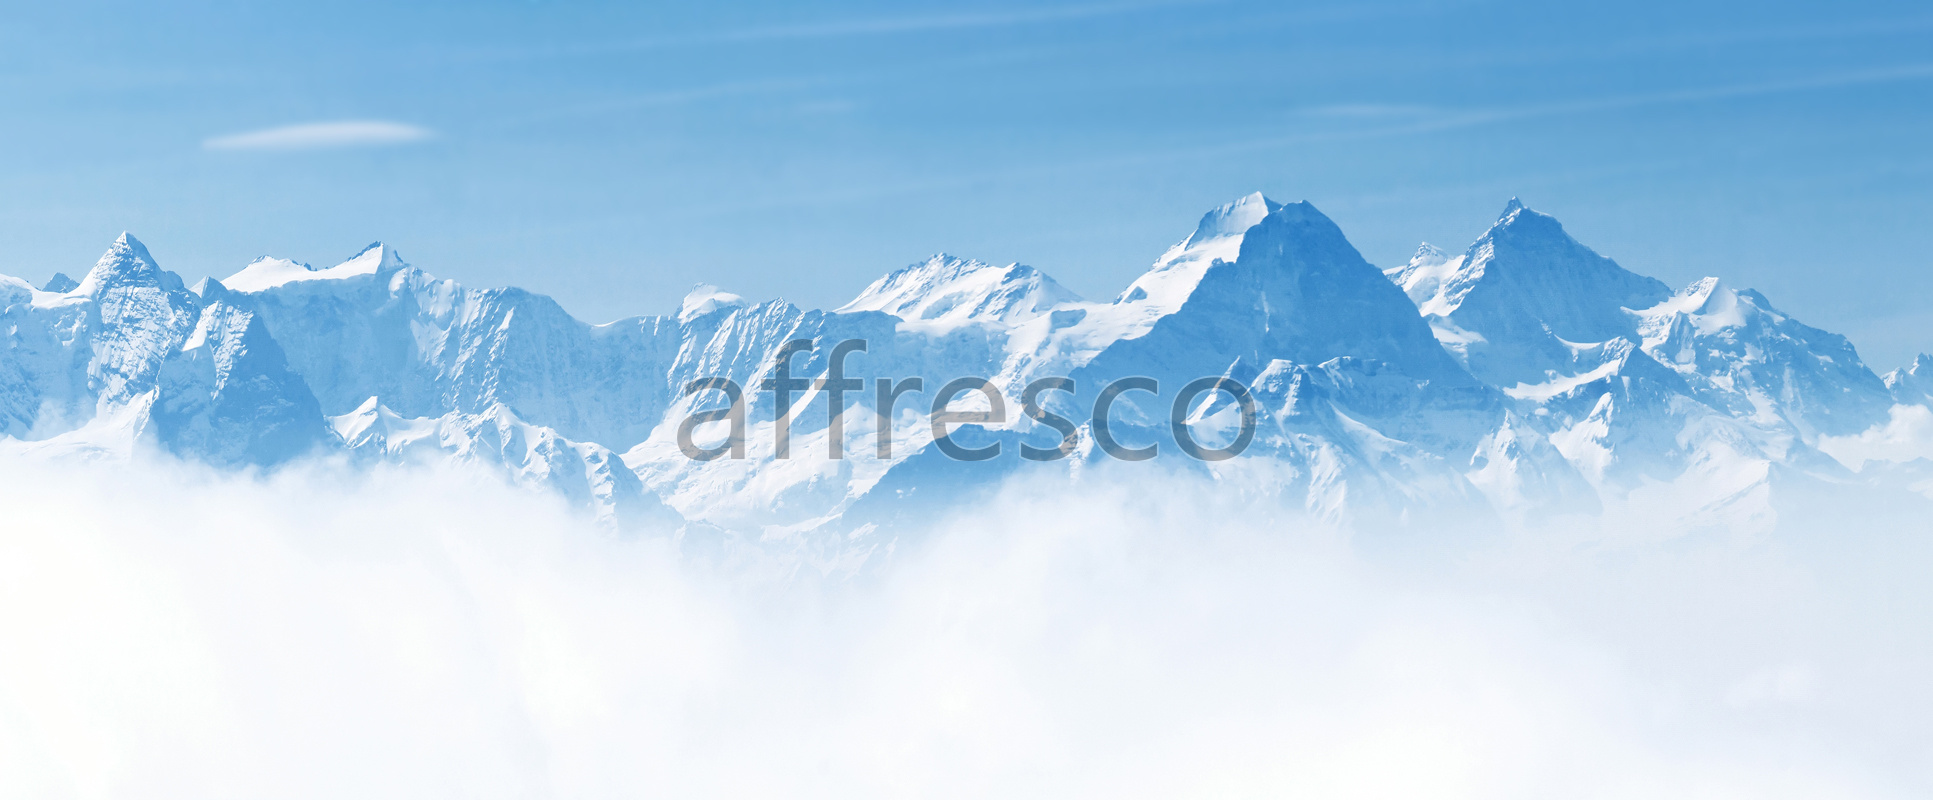 Фрески, Панорама снежных вершин